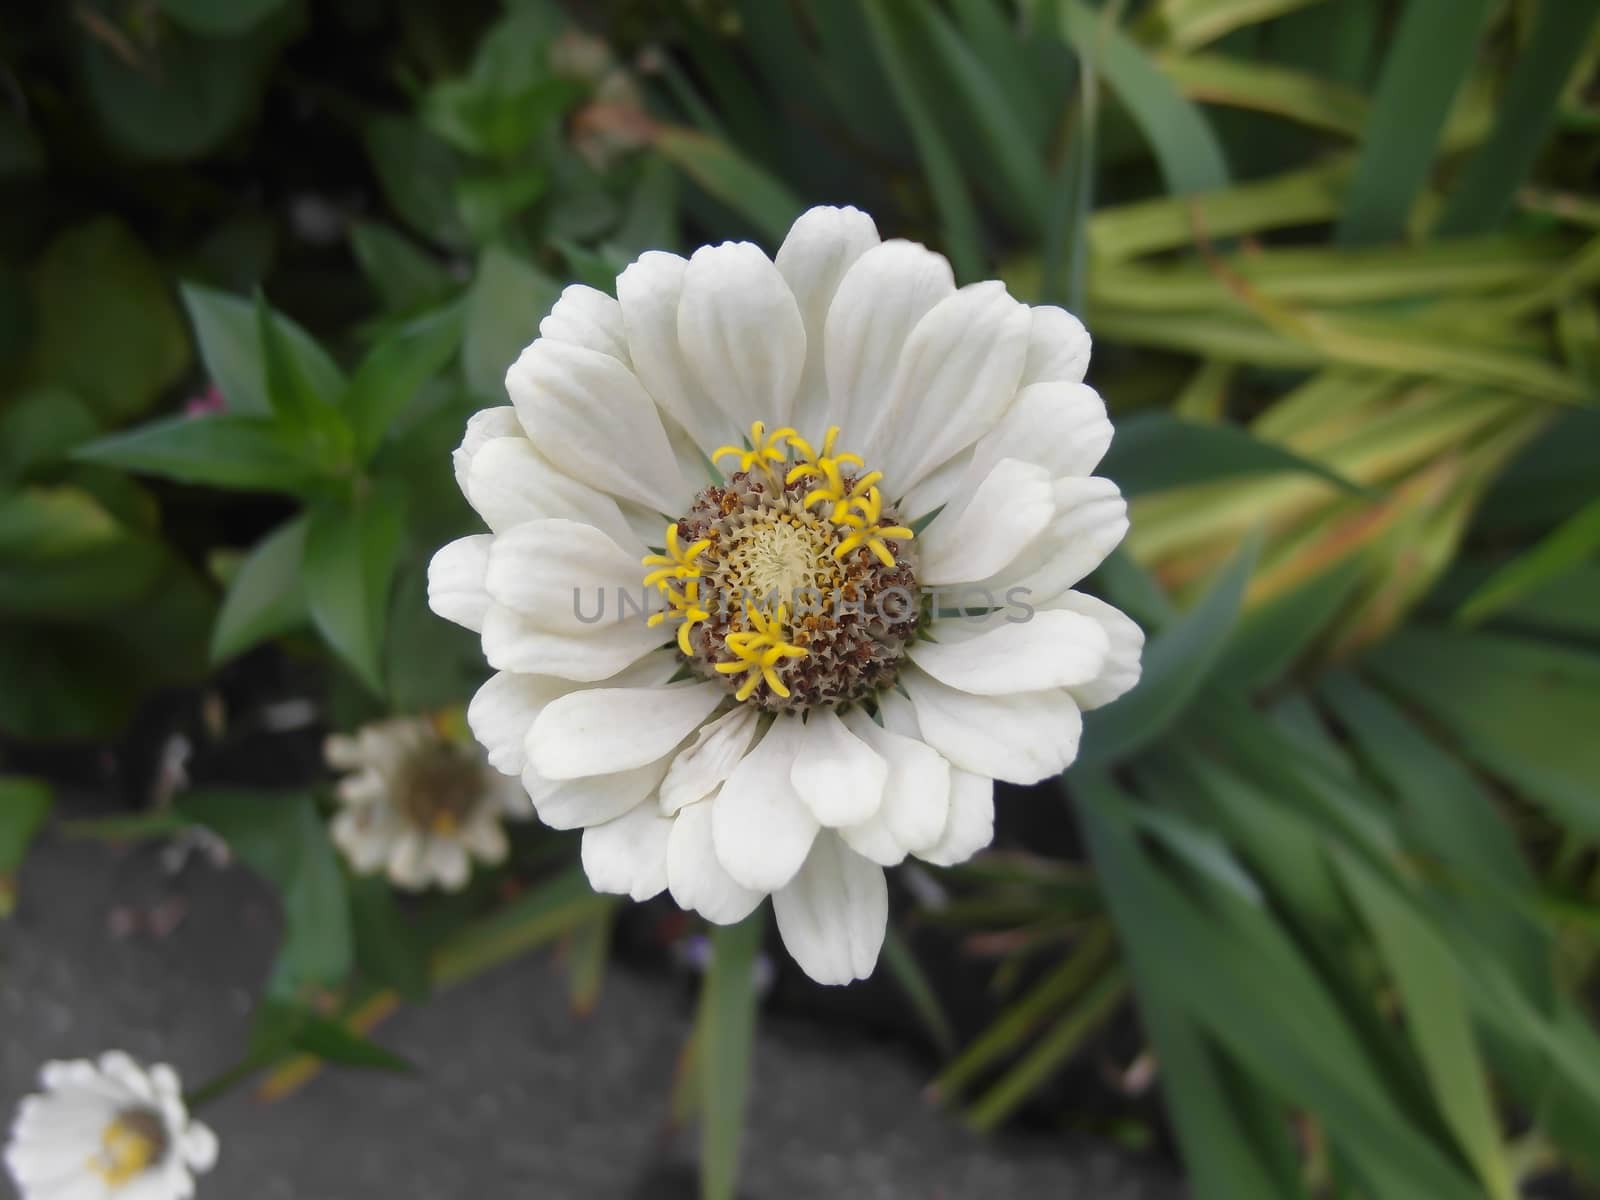 on flowerbed in summer grows beautiful white flower